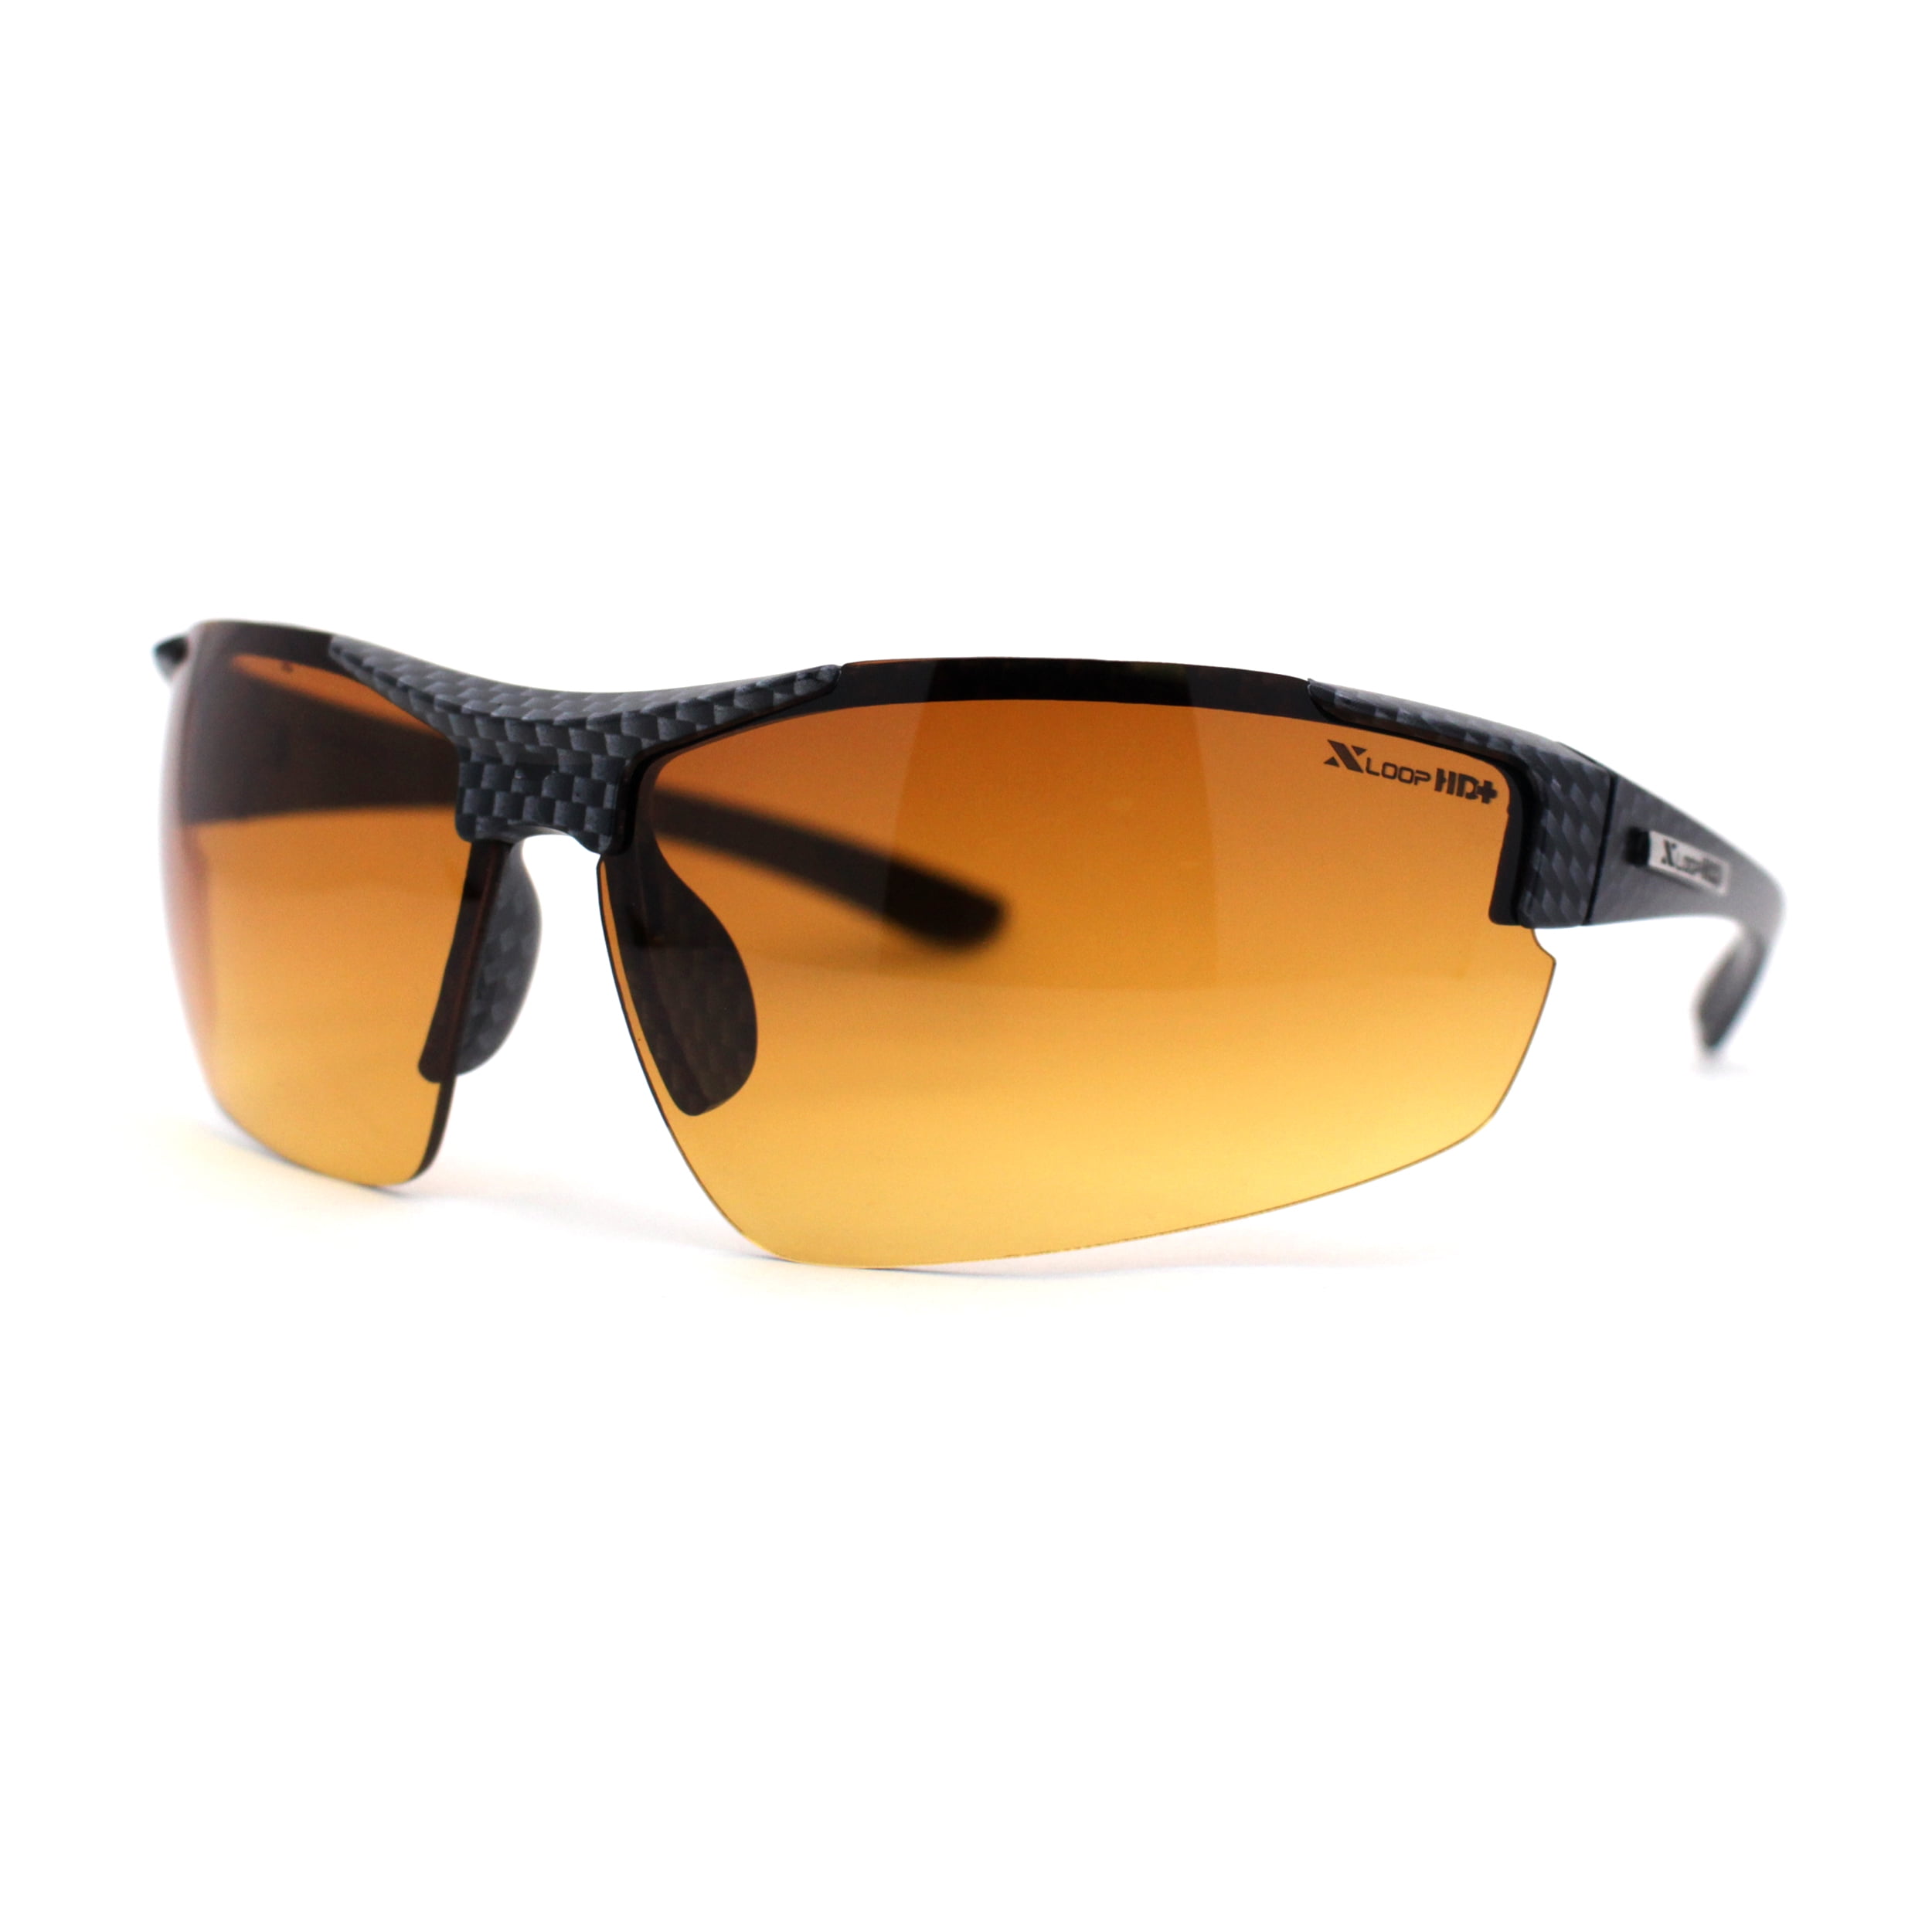 Xloop HD Driving Lens Mens Sport Wrap Around Half Rim Sunglasses Carbon Fiber b0119625 9fe7 4ce6 bf91 5b8e373a798a.02b8cbba860deccf06065b68f7326c2e